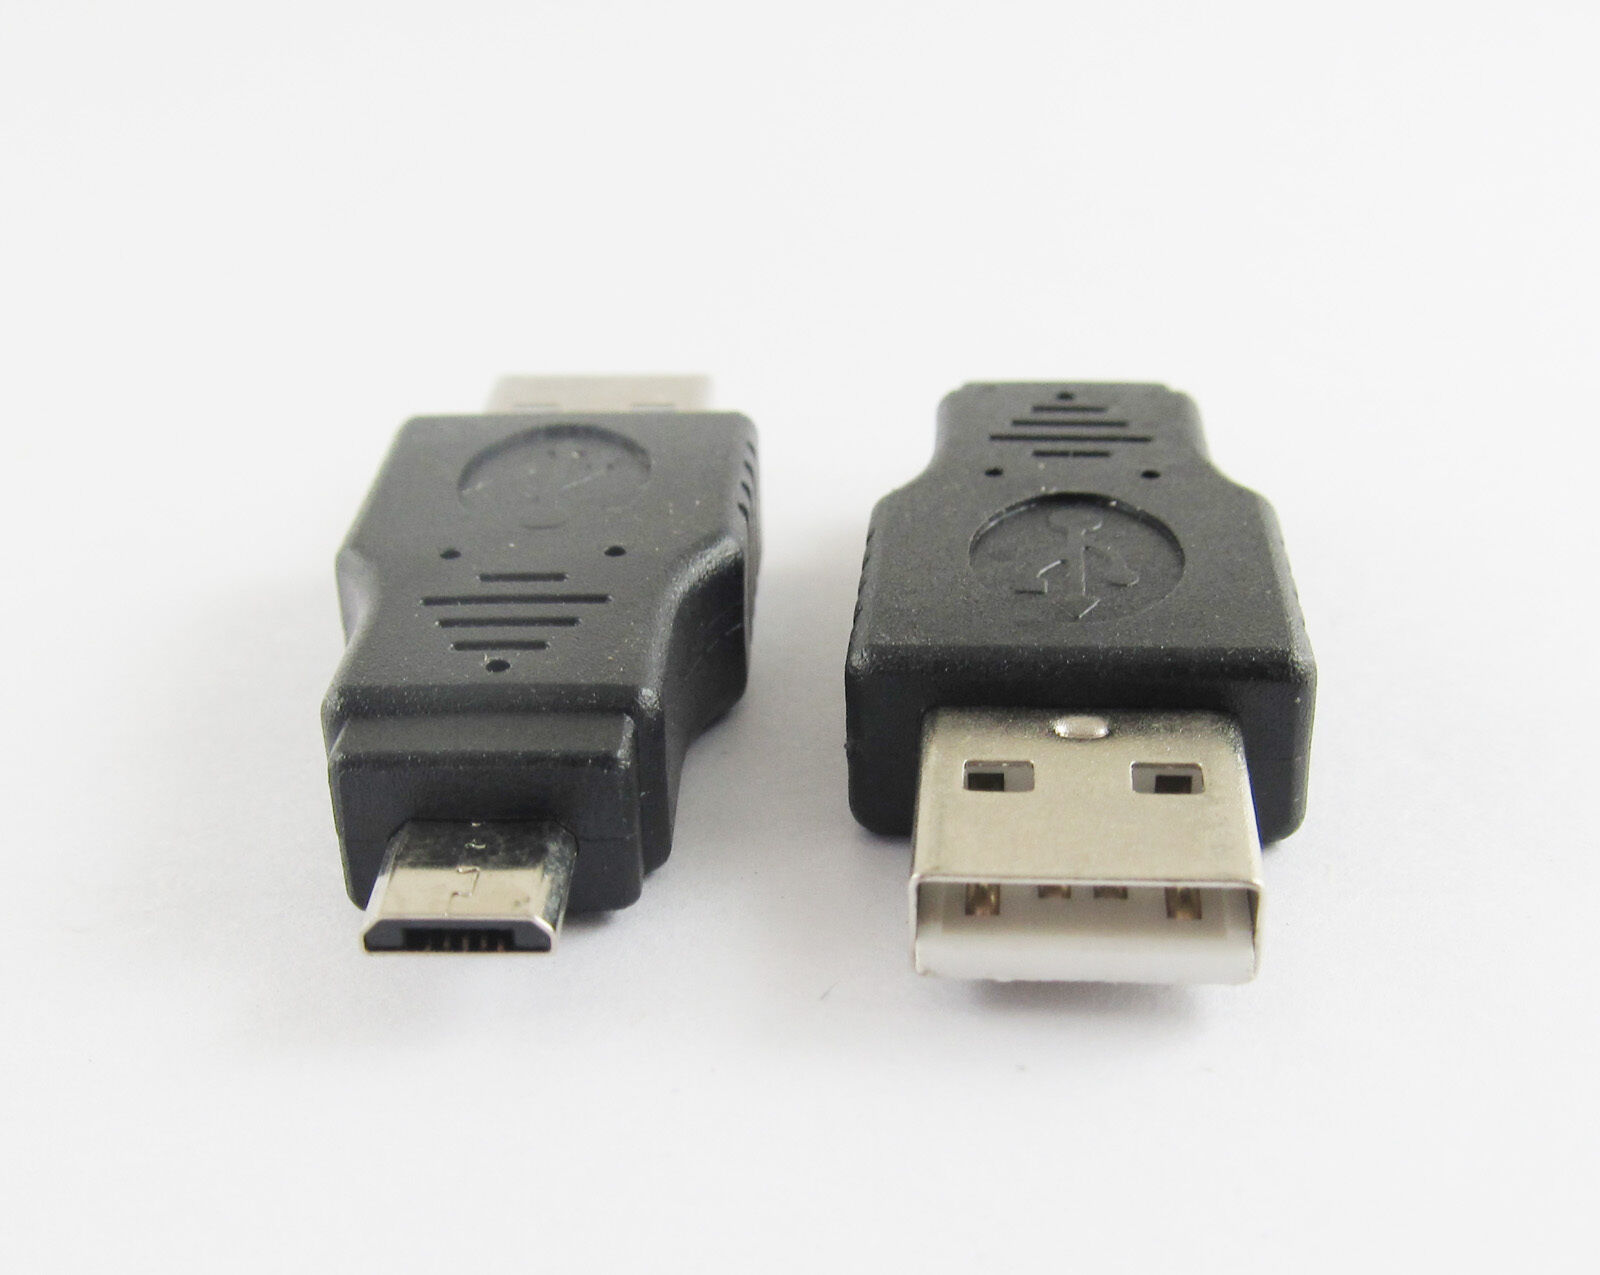 10pcs USB 2.0 A Male Plug To Micro-B USB 5 Pin Data Adapter Converter Connector